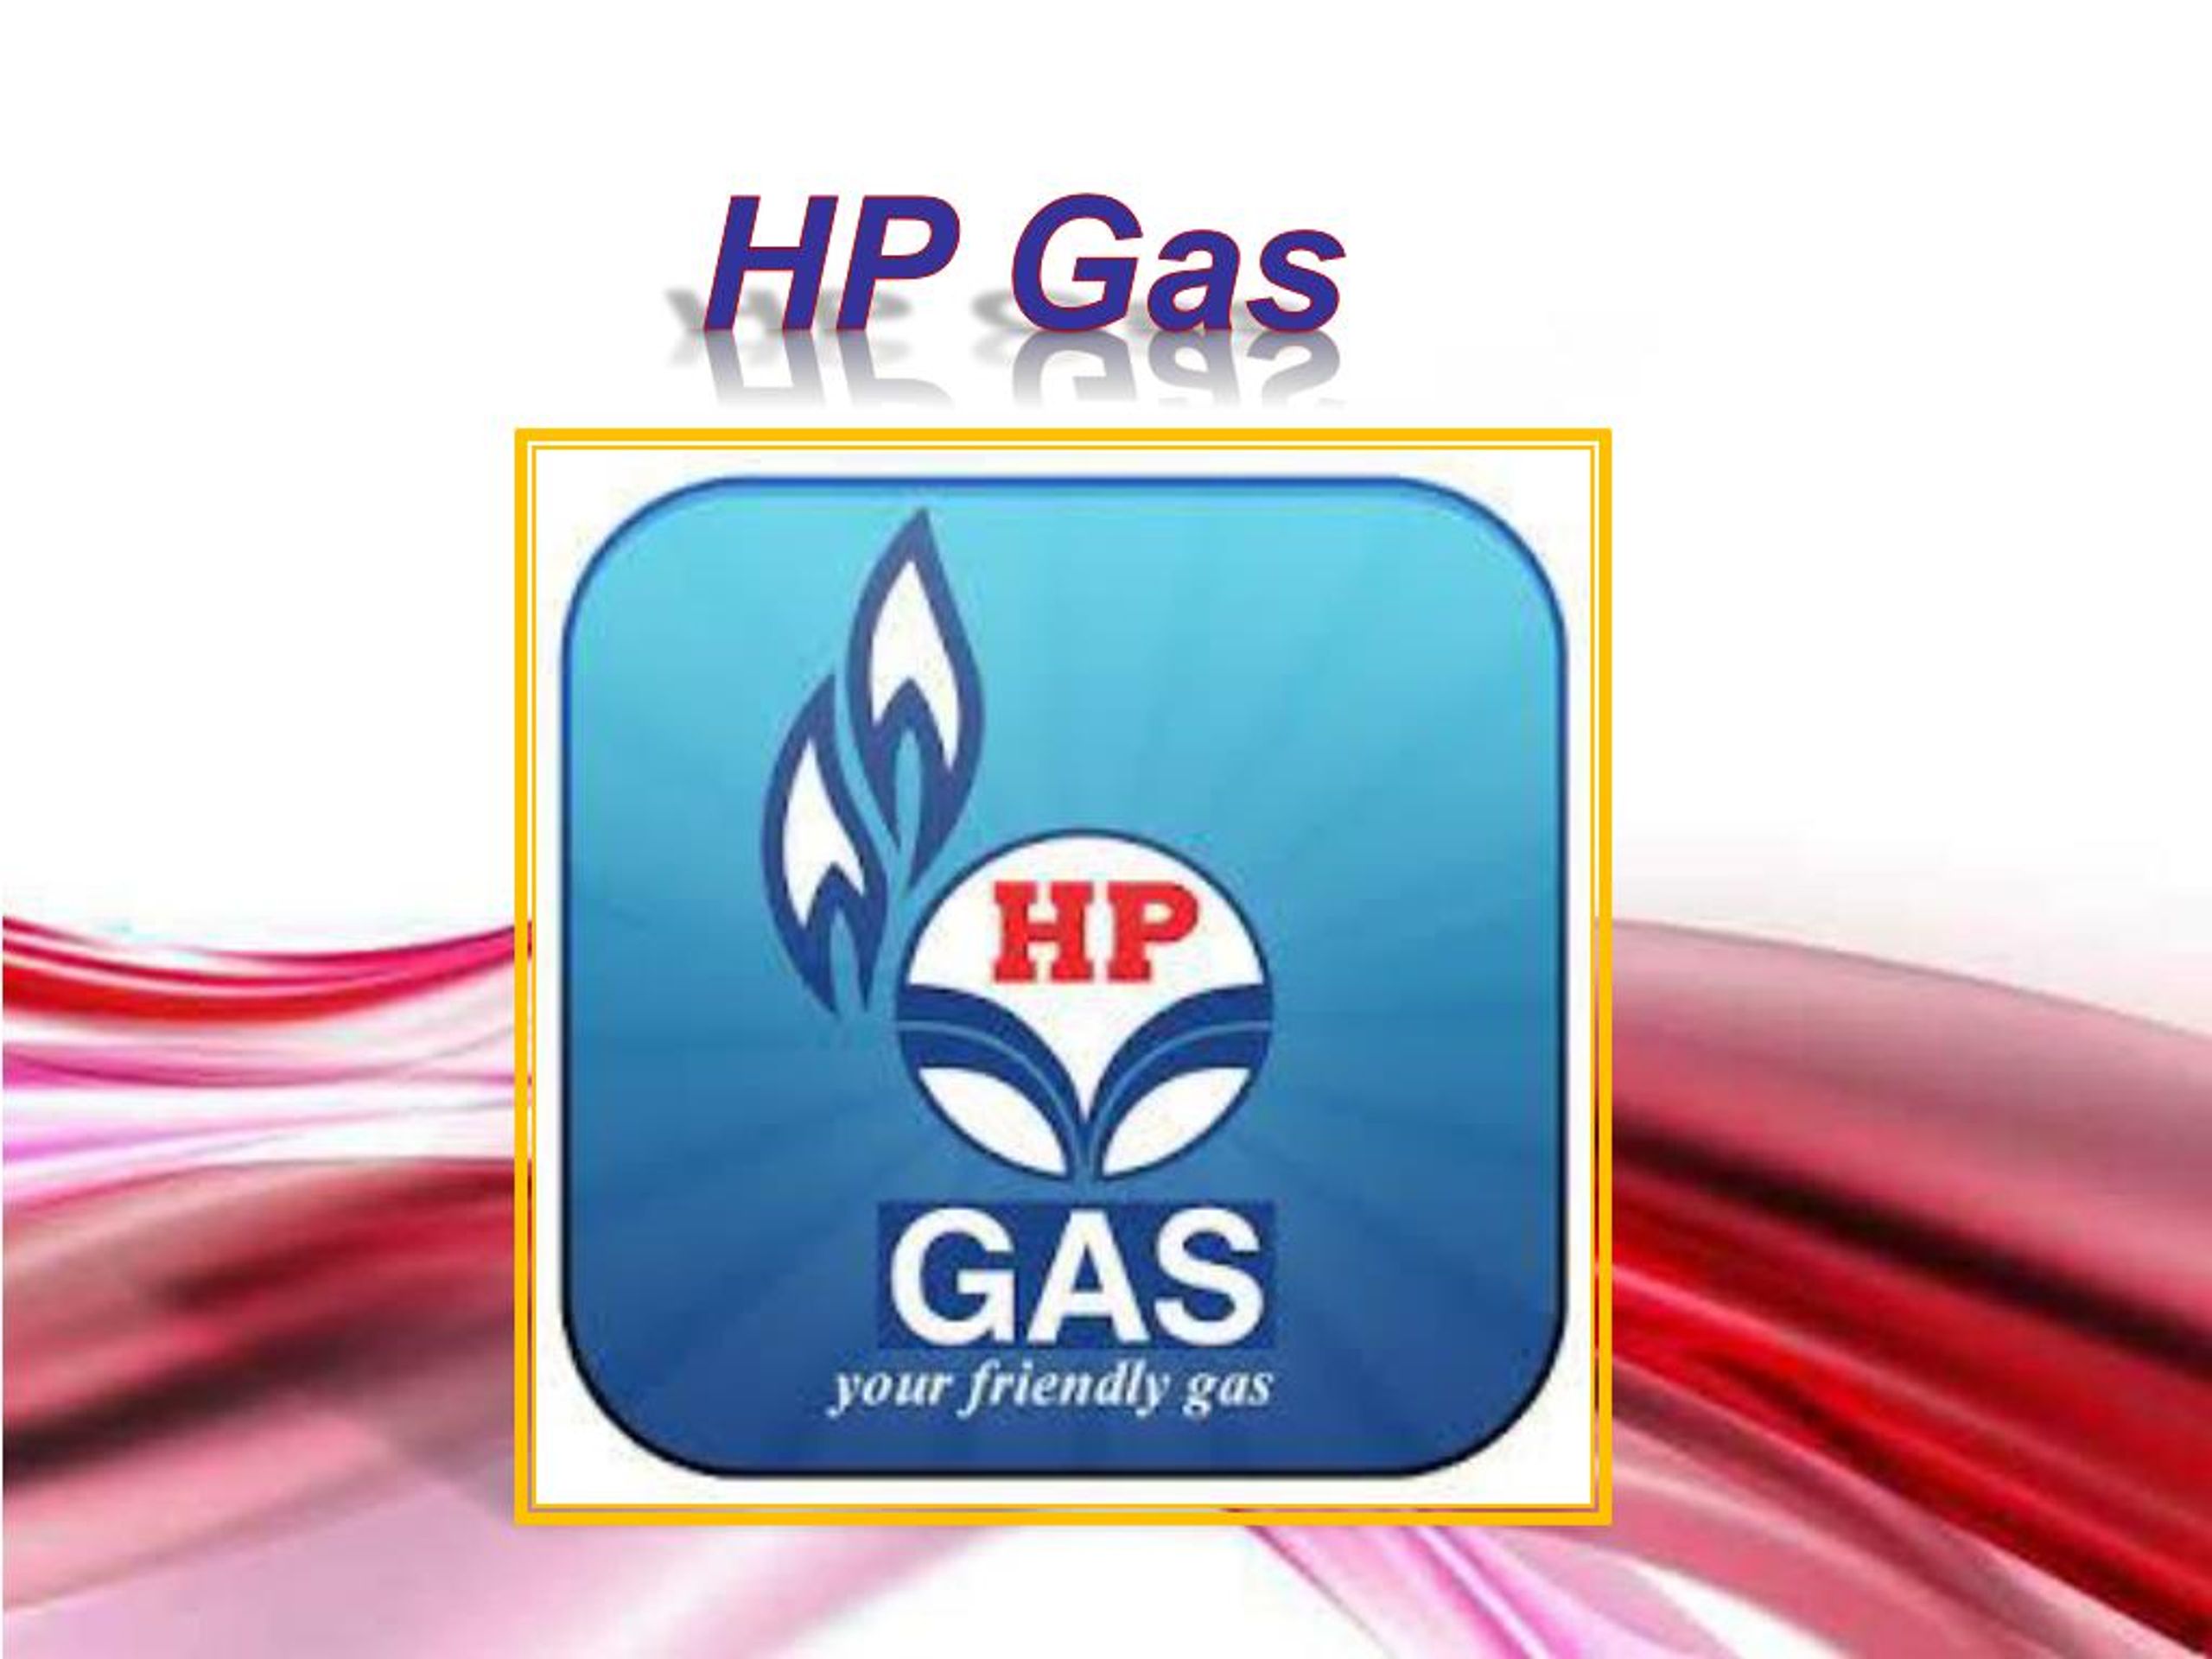 HP GAS App on Windows PC Download Free - 3.0.1 - com.hpclgas